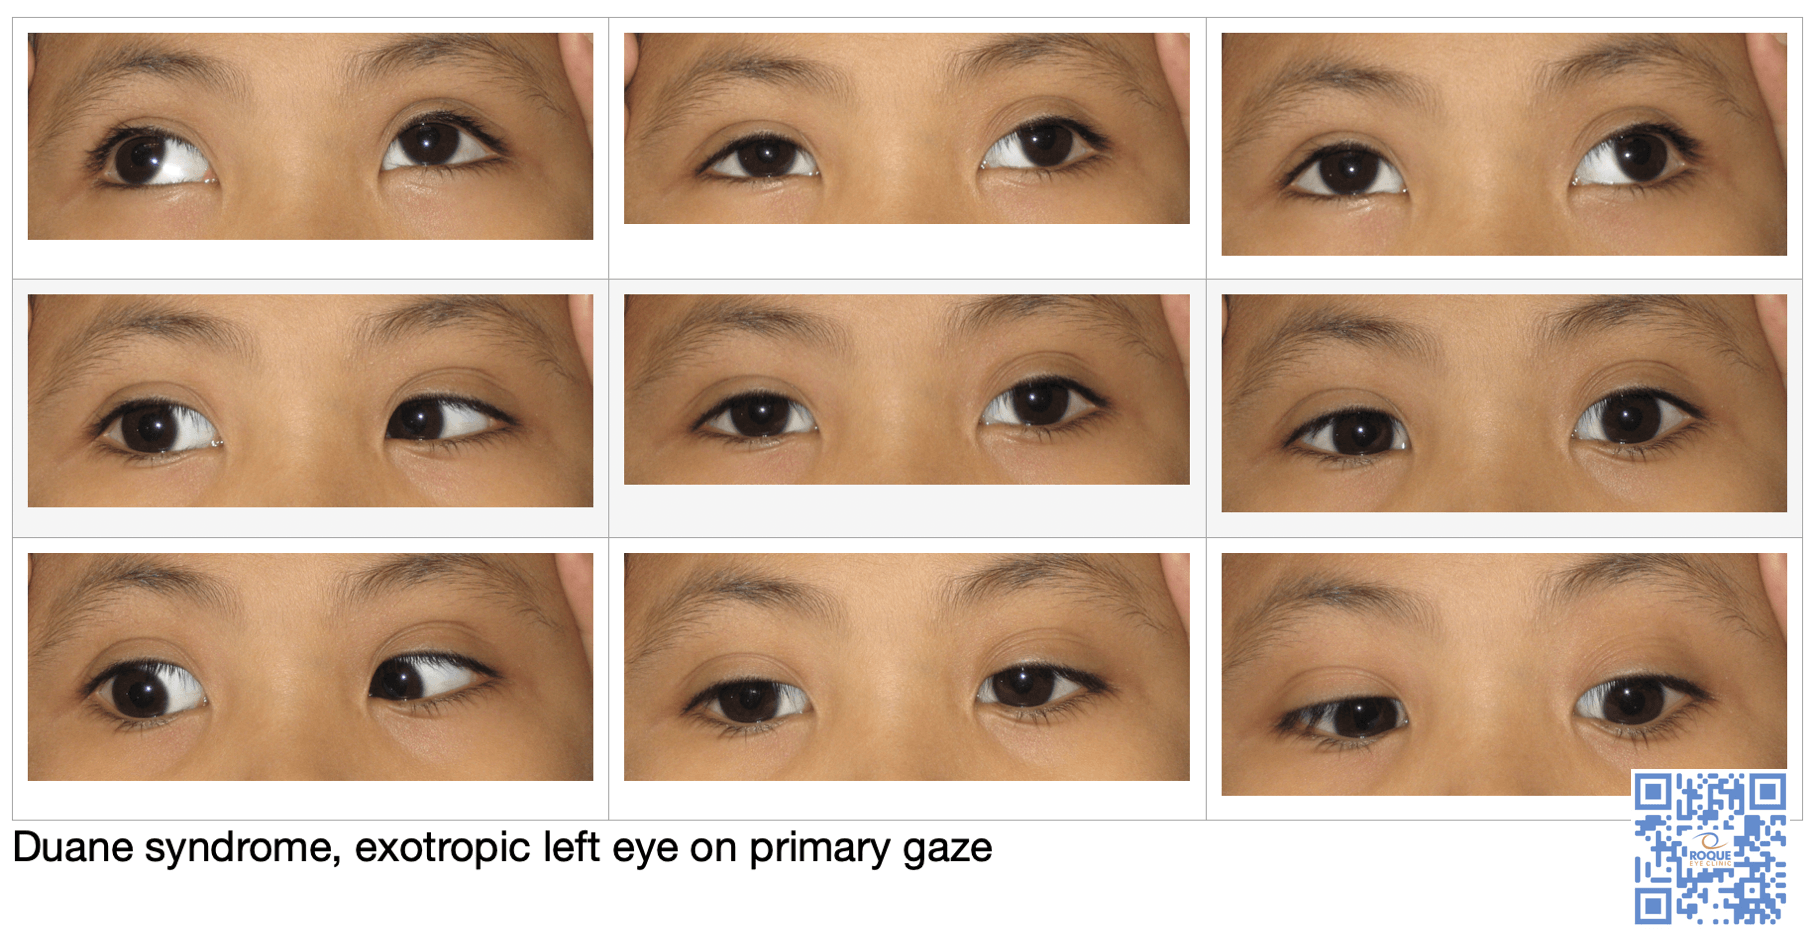 Duane syndrome, exotropic left eye on primary gaze